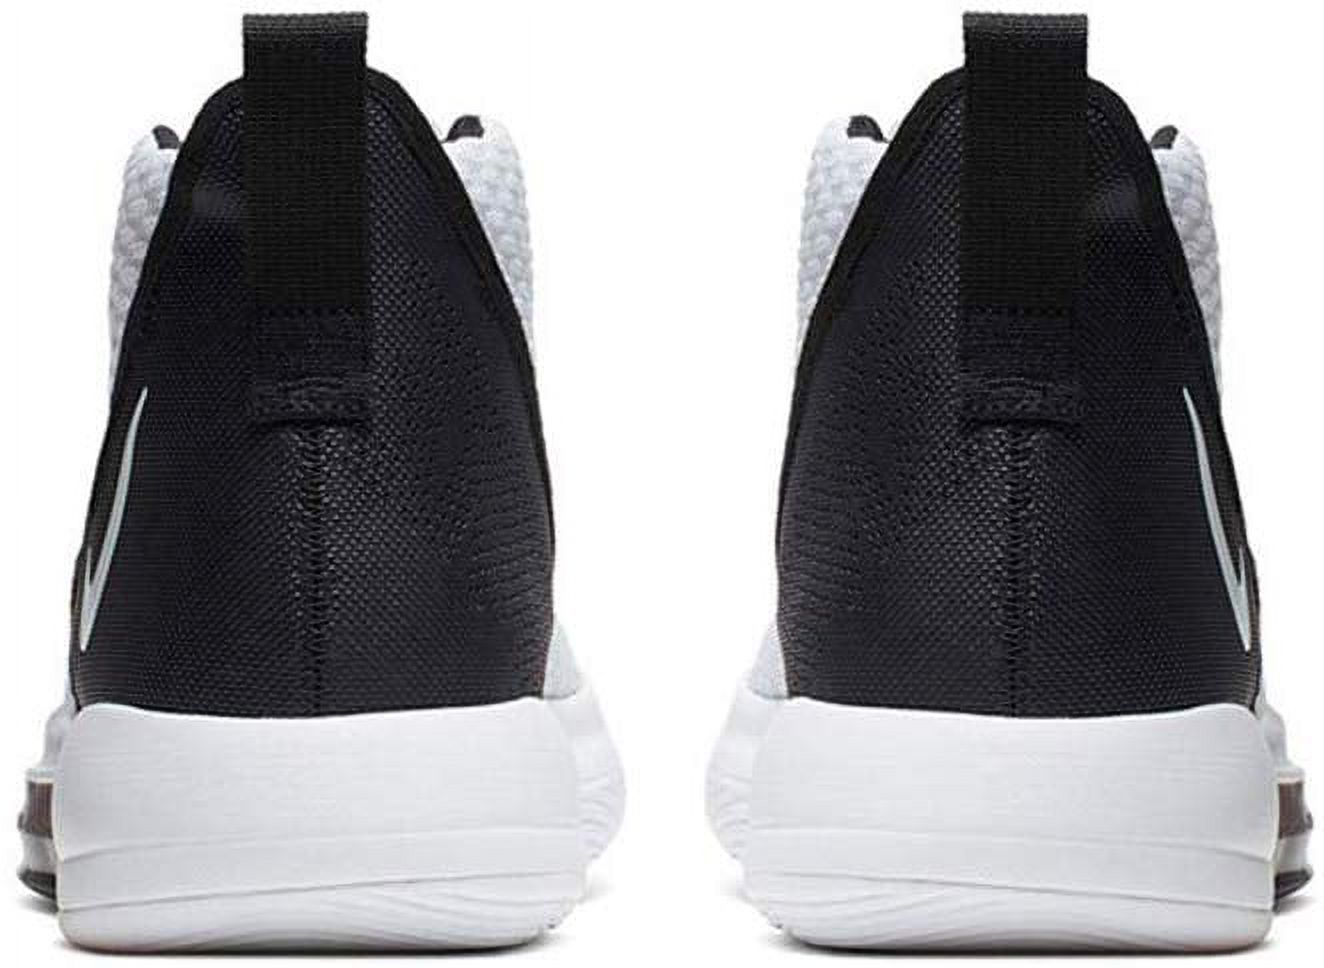 Nike Men's Zoom Rize TB Basketball Shoe, White/Black, 12.5 D(M) US - image 3 of 4